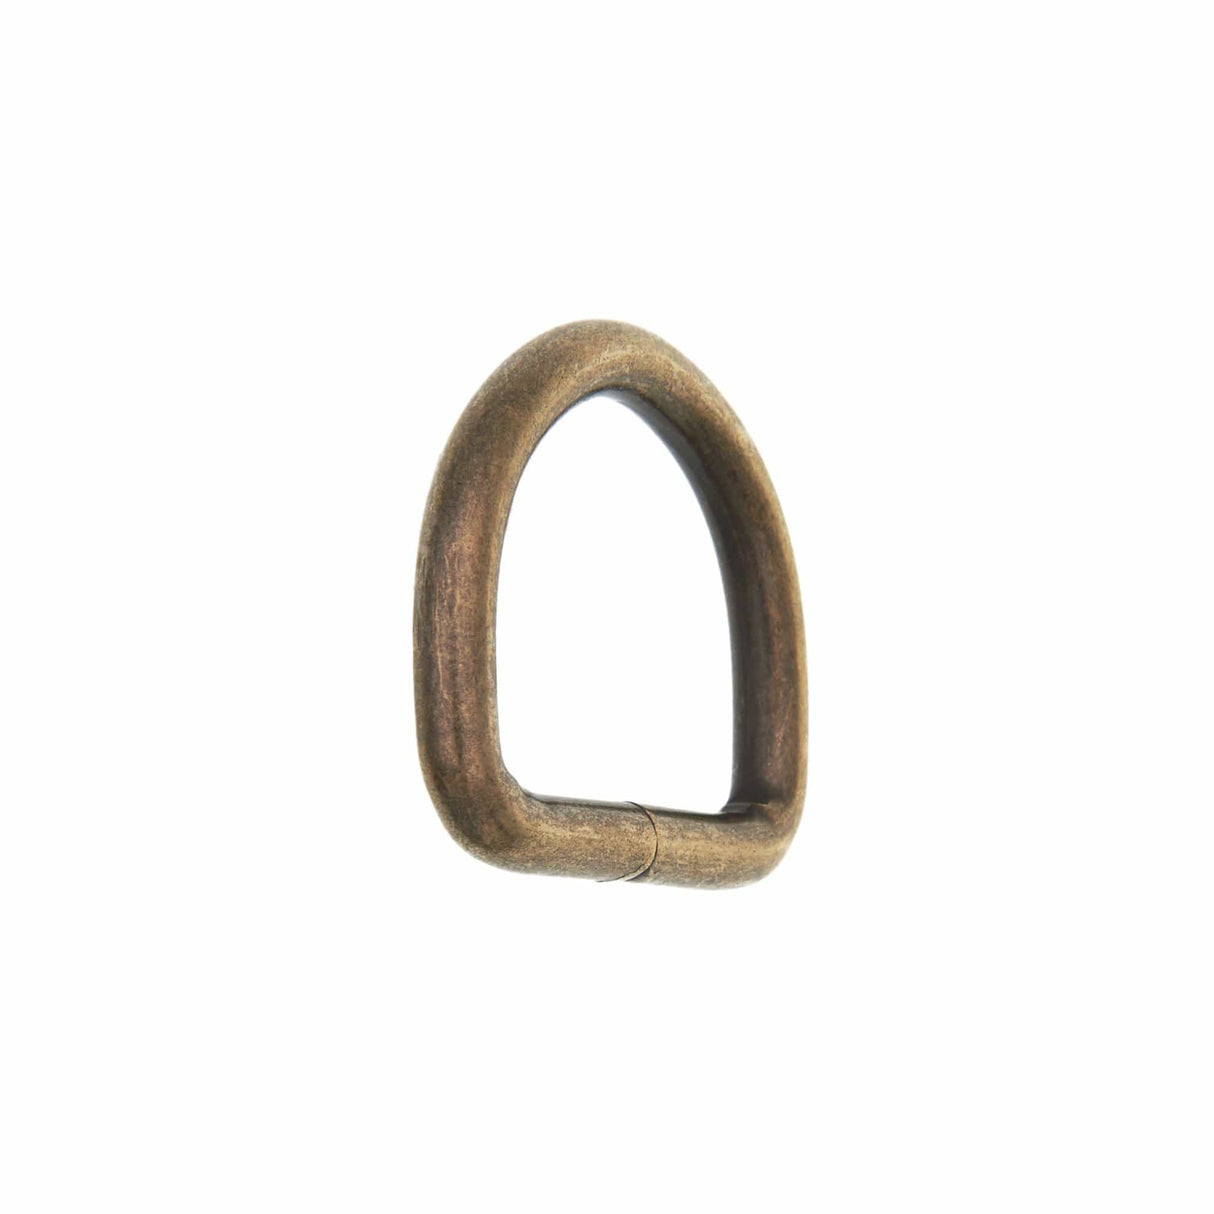 Ohio Travel Bag Rings & Slides 1" Antique Brass, Welded D Ring, Steel, #P-2139-ANTB P-2139-ANTB